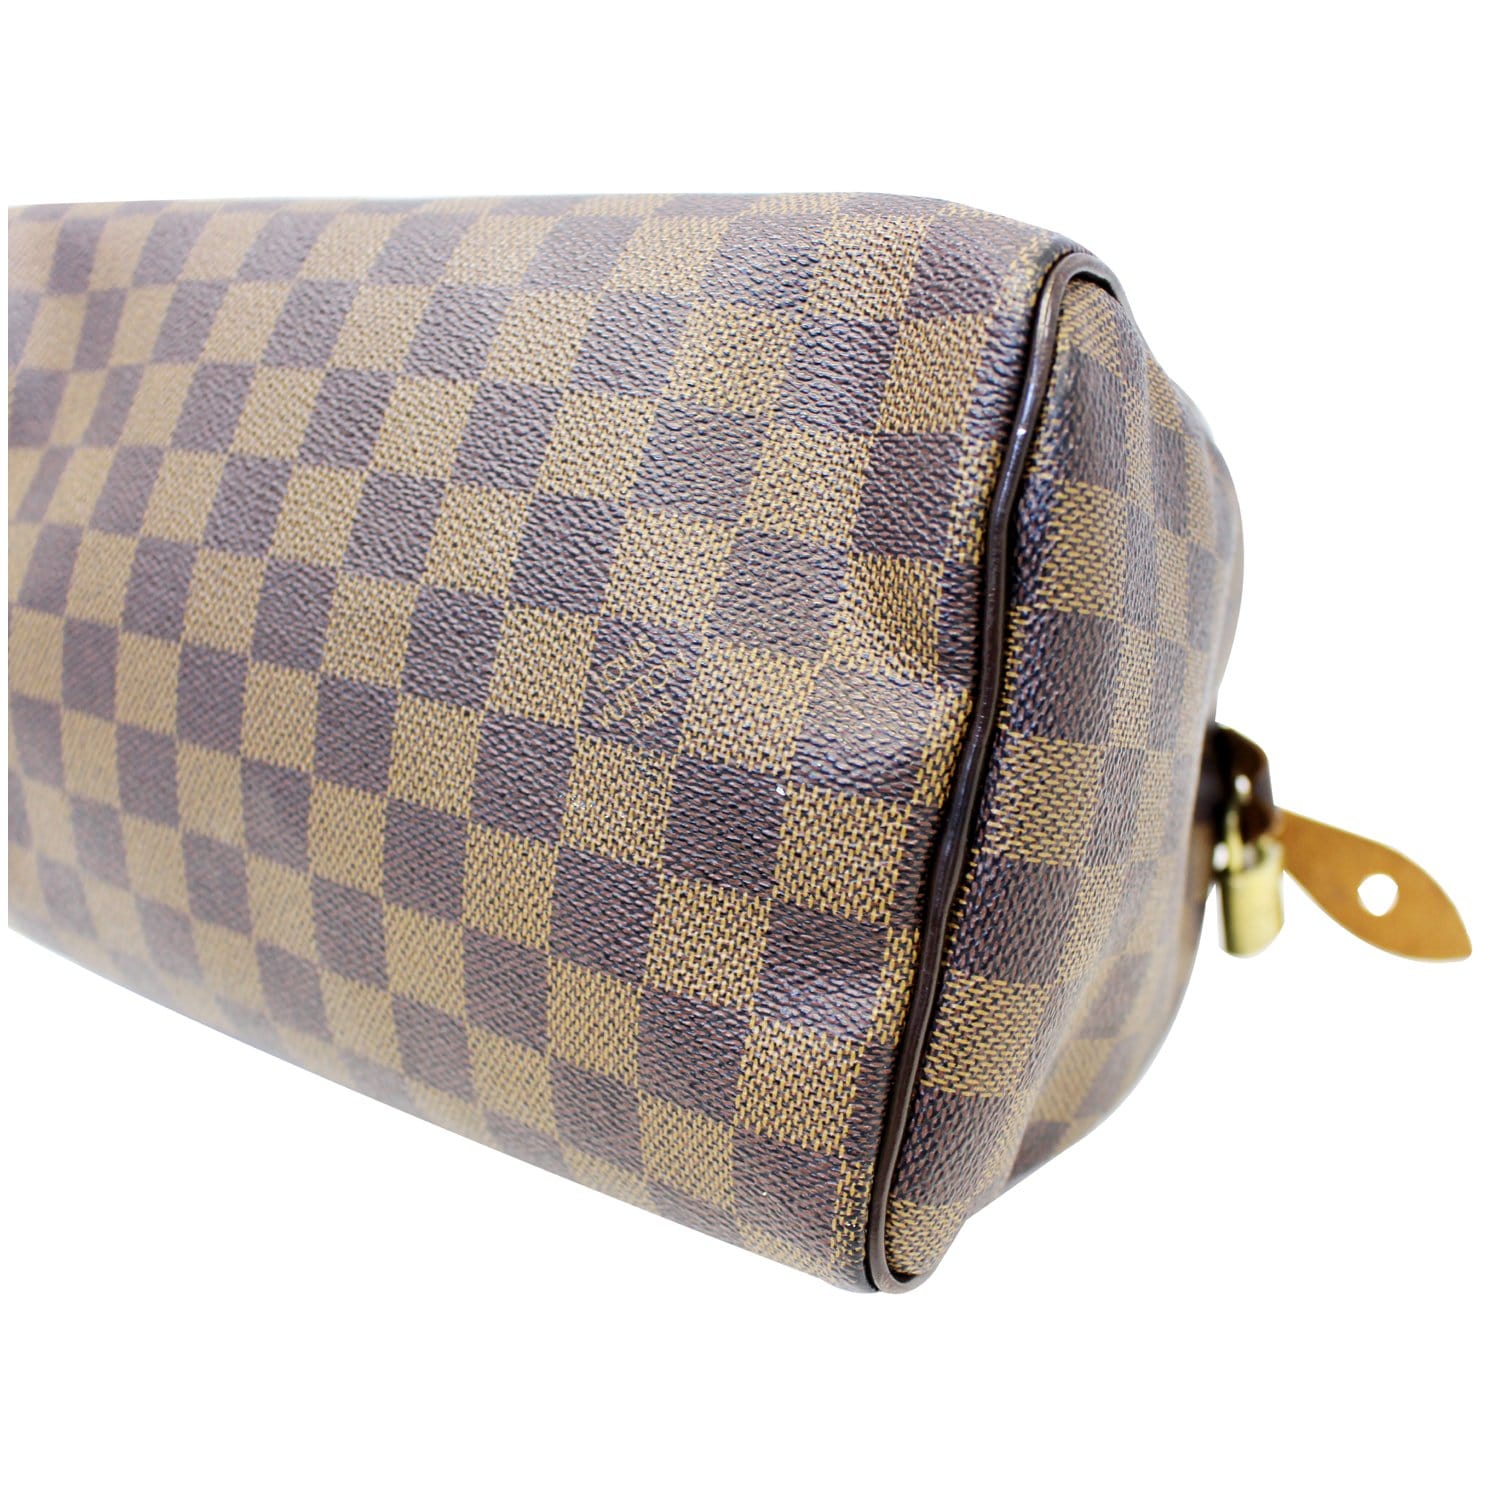 Authentic Louis Vuitton Speedy 25 Damier Ebene Satchel Handbag TR3152 France